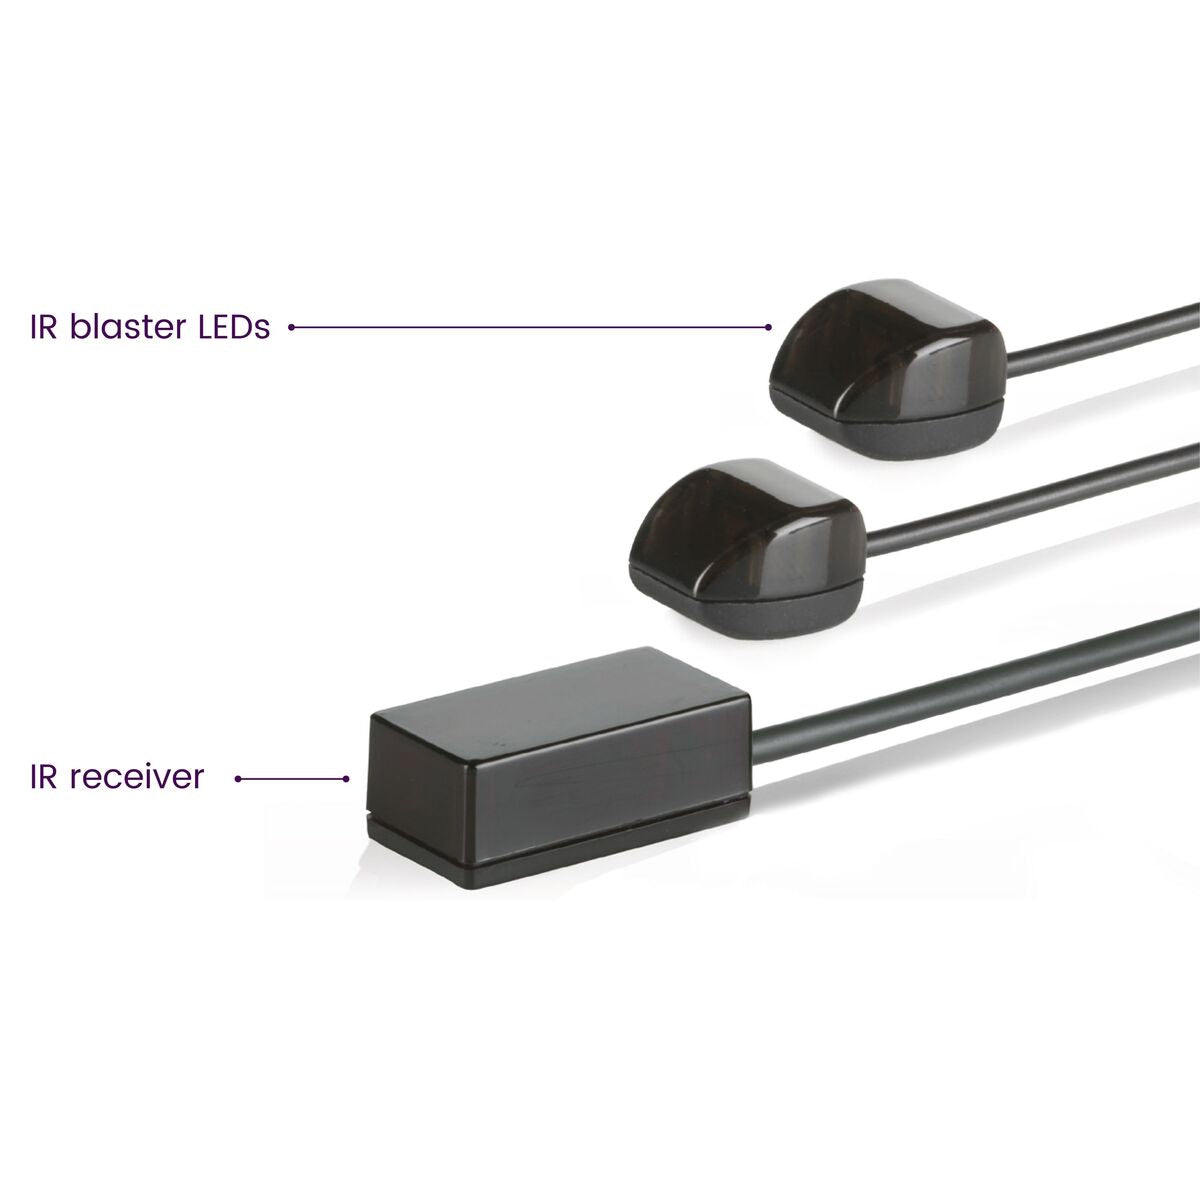 Invisible Control 6 XTRA - IR extender - Detail Image IR blaster LEDS and IR receiver | Marmitek